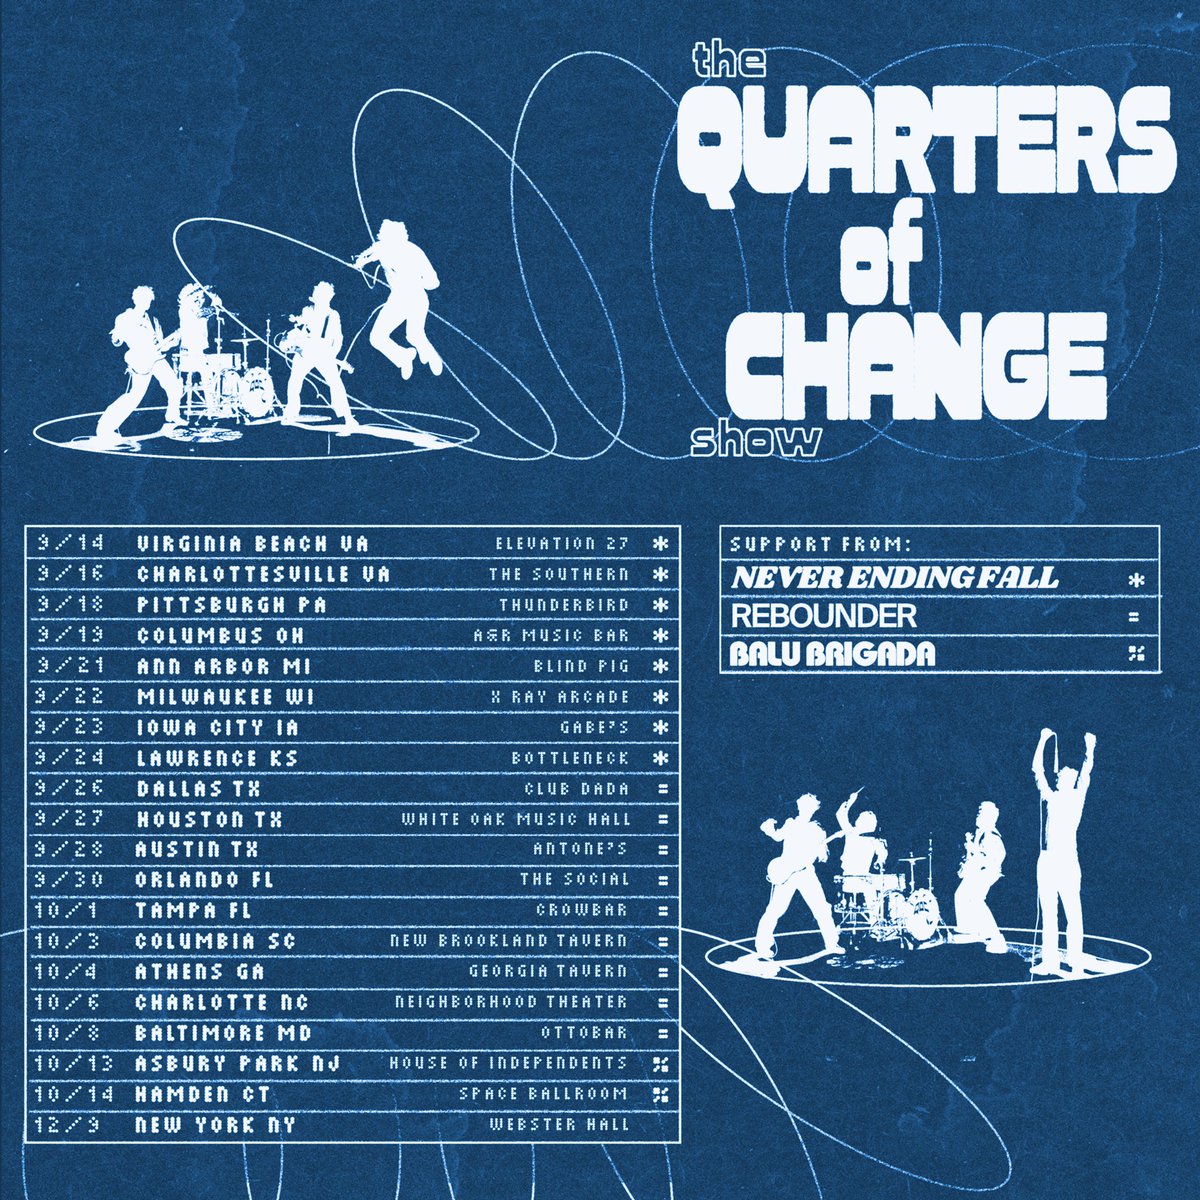 The Quarters of Change Show welcomes @NEFdaily, @reboundernyc, and @BaluBrigada. linktr.ee/quartersofc